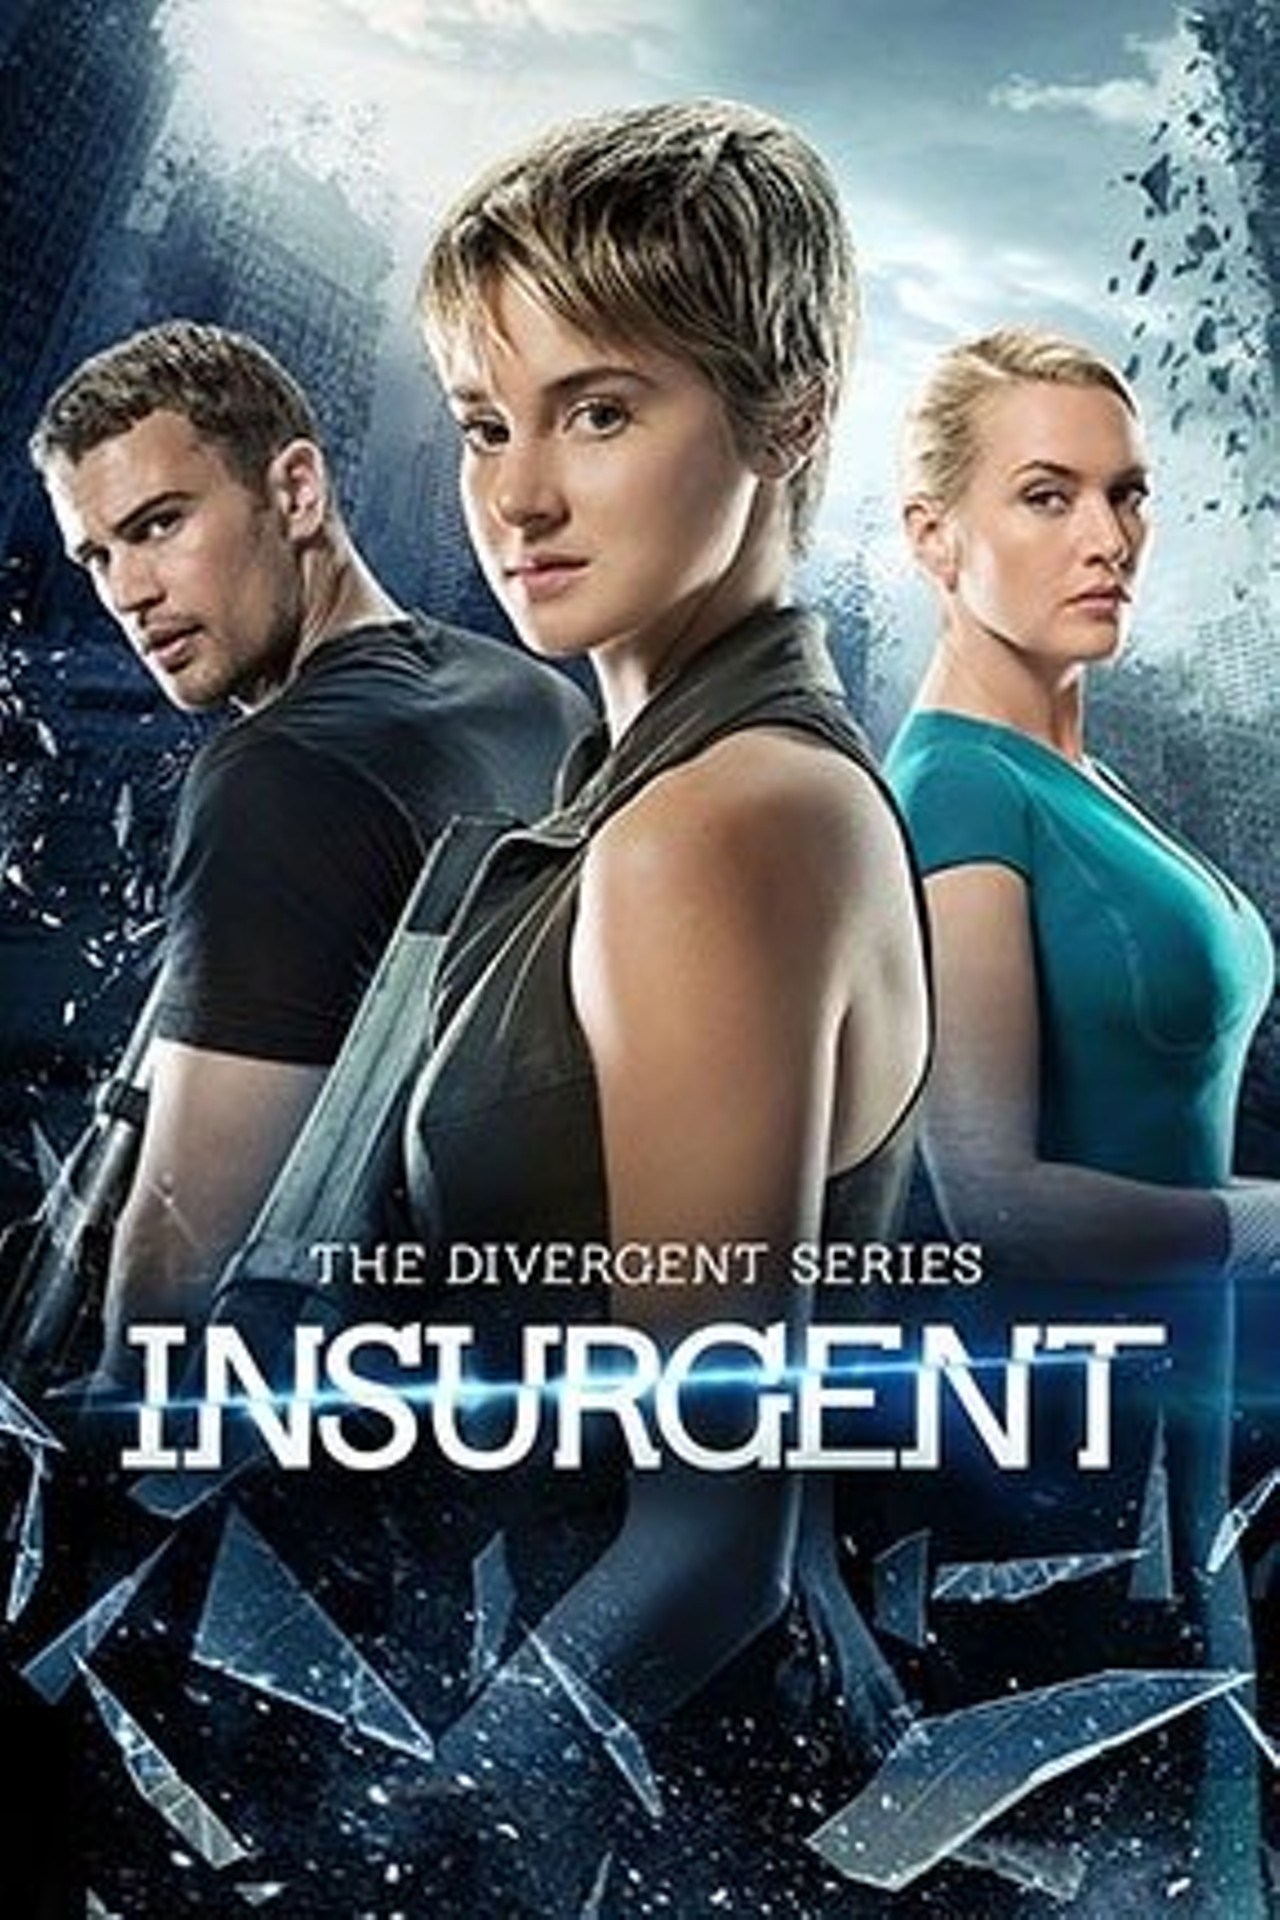 Divergent series